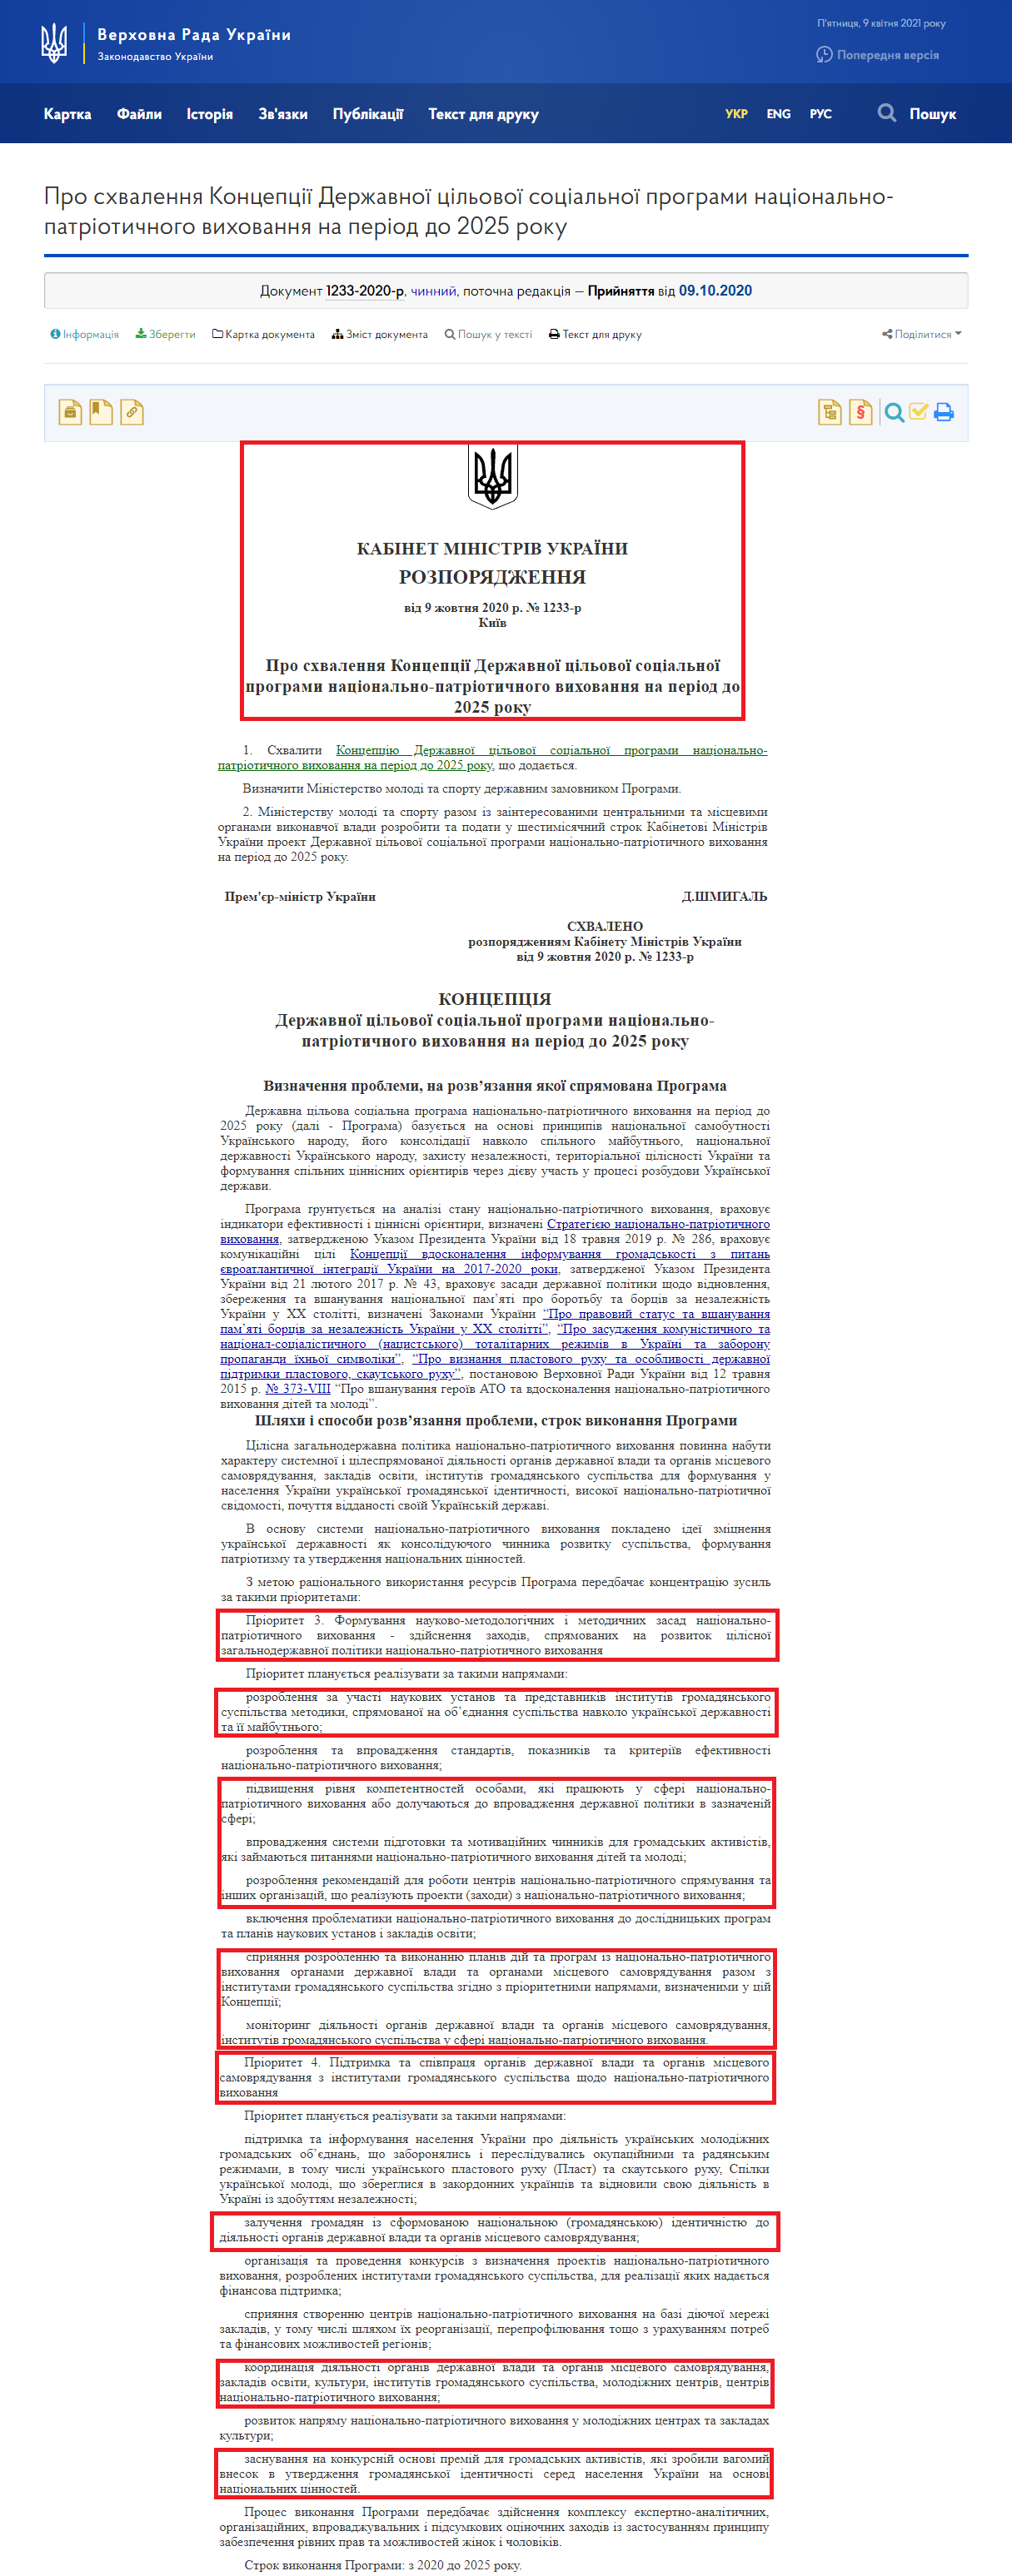 https://zakon.rada.gov.ua/laws/show/1233-2020-%D1%80#Text